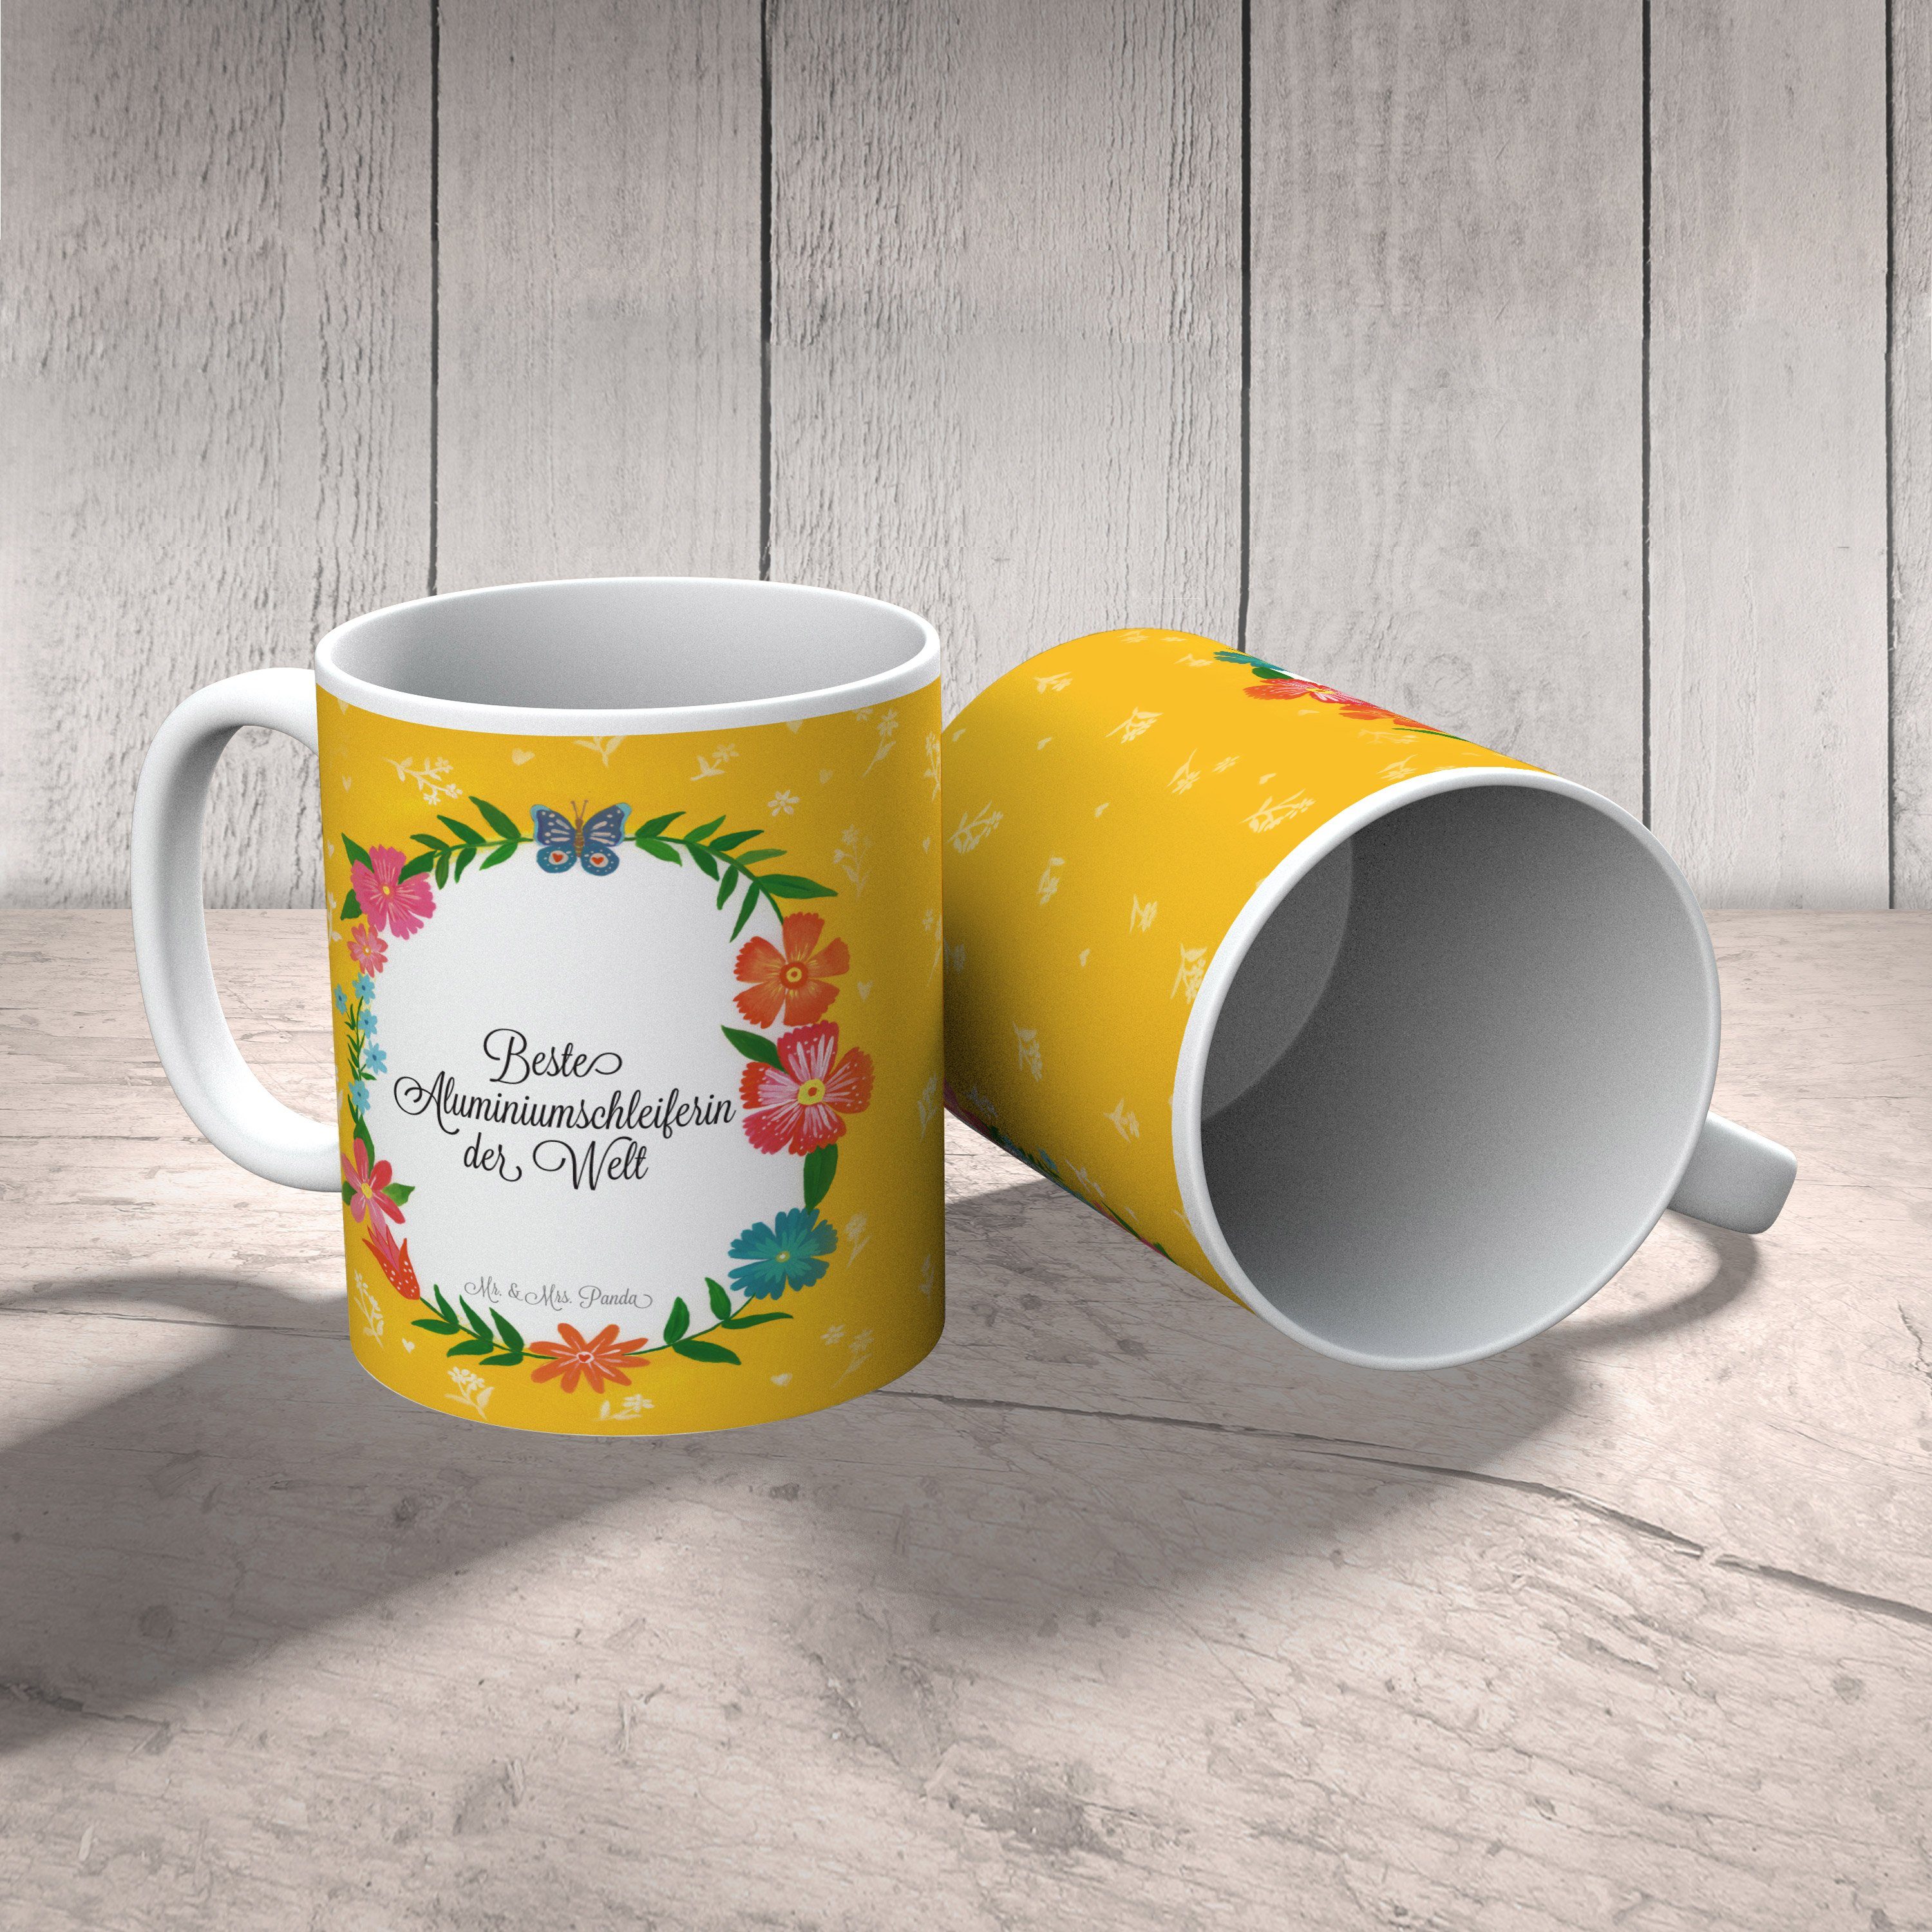 Geschenk, Tasse Keramiktasse, - Keramik Mr. & Mrs. Abschied, Panda Aluminiumschleiferin Kaffeebecher,